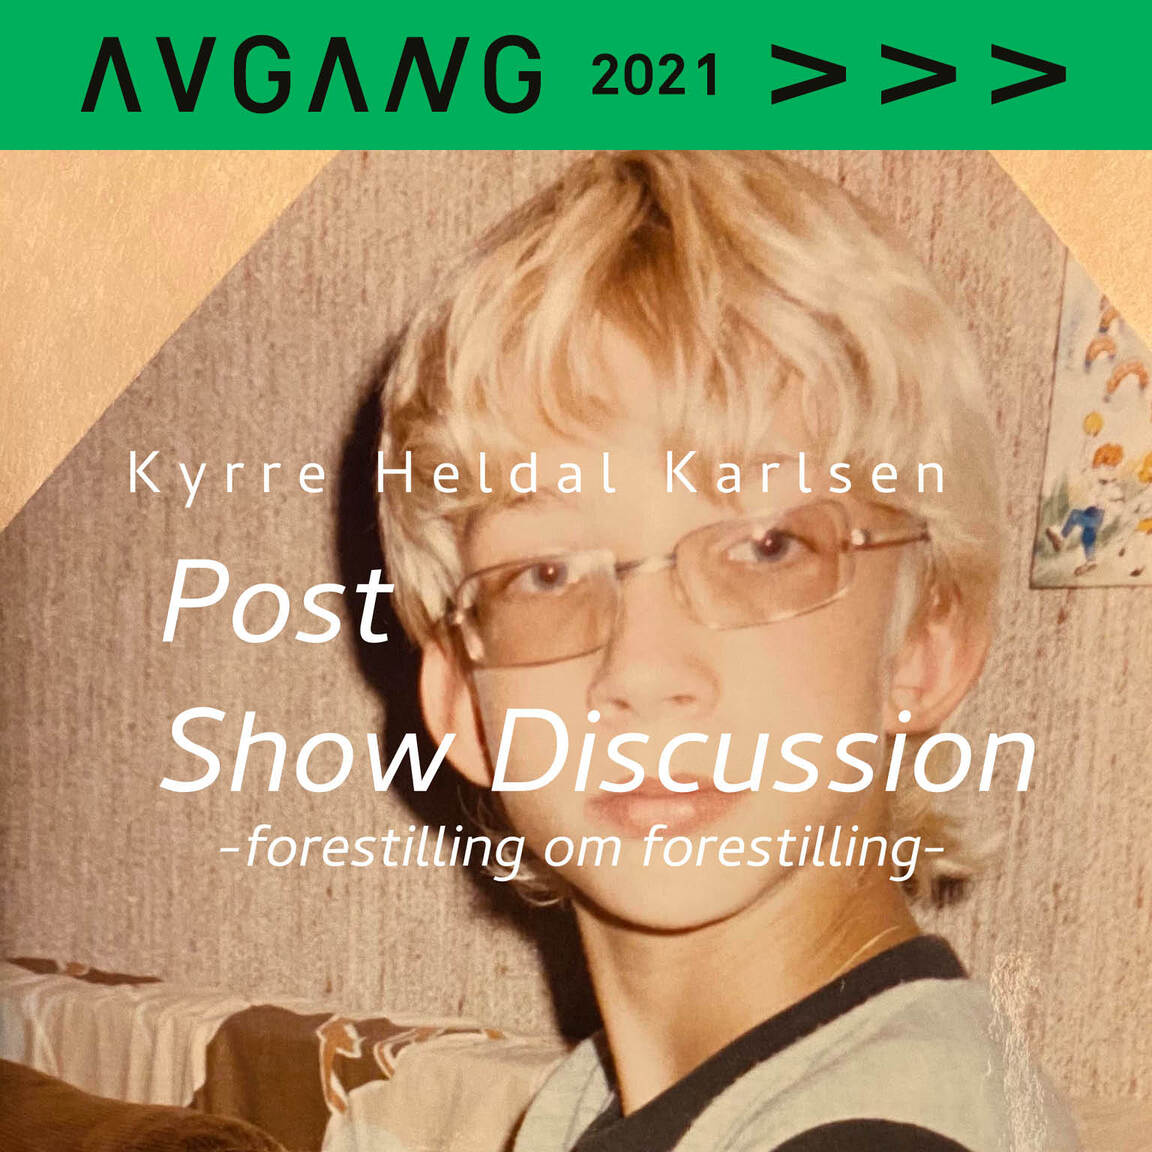 Avgang 2021: Post Show Discussion – forestilling om forestilling